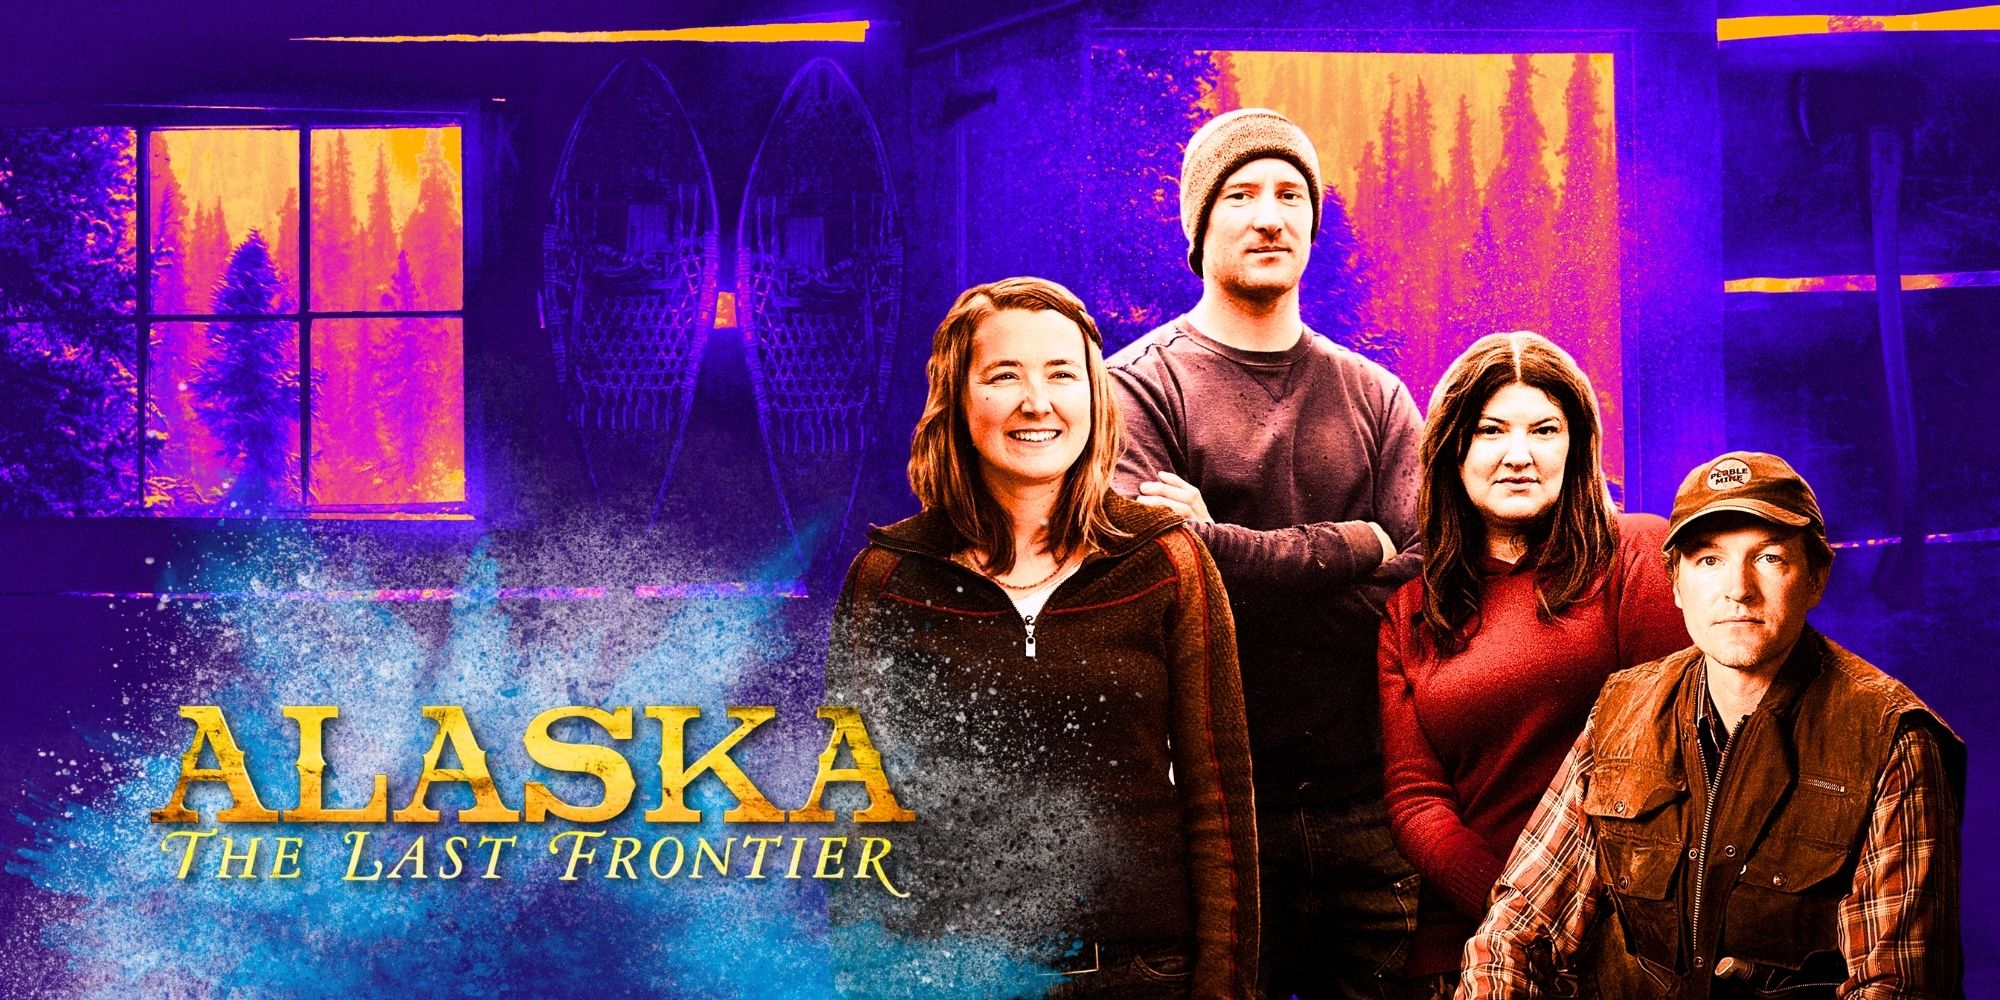 Alaska: The Last Frontier cast